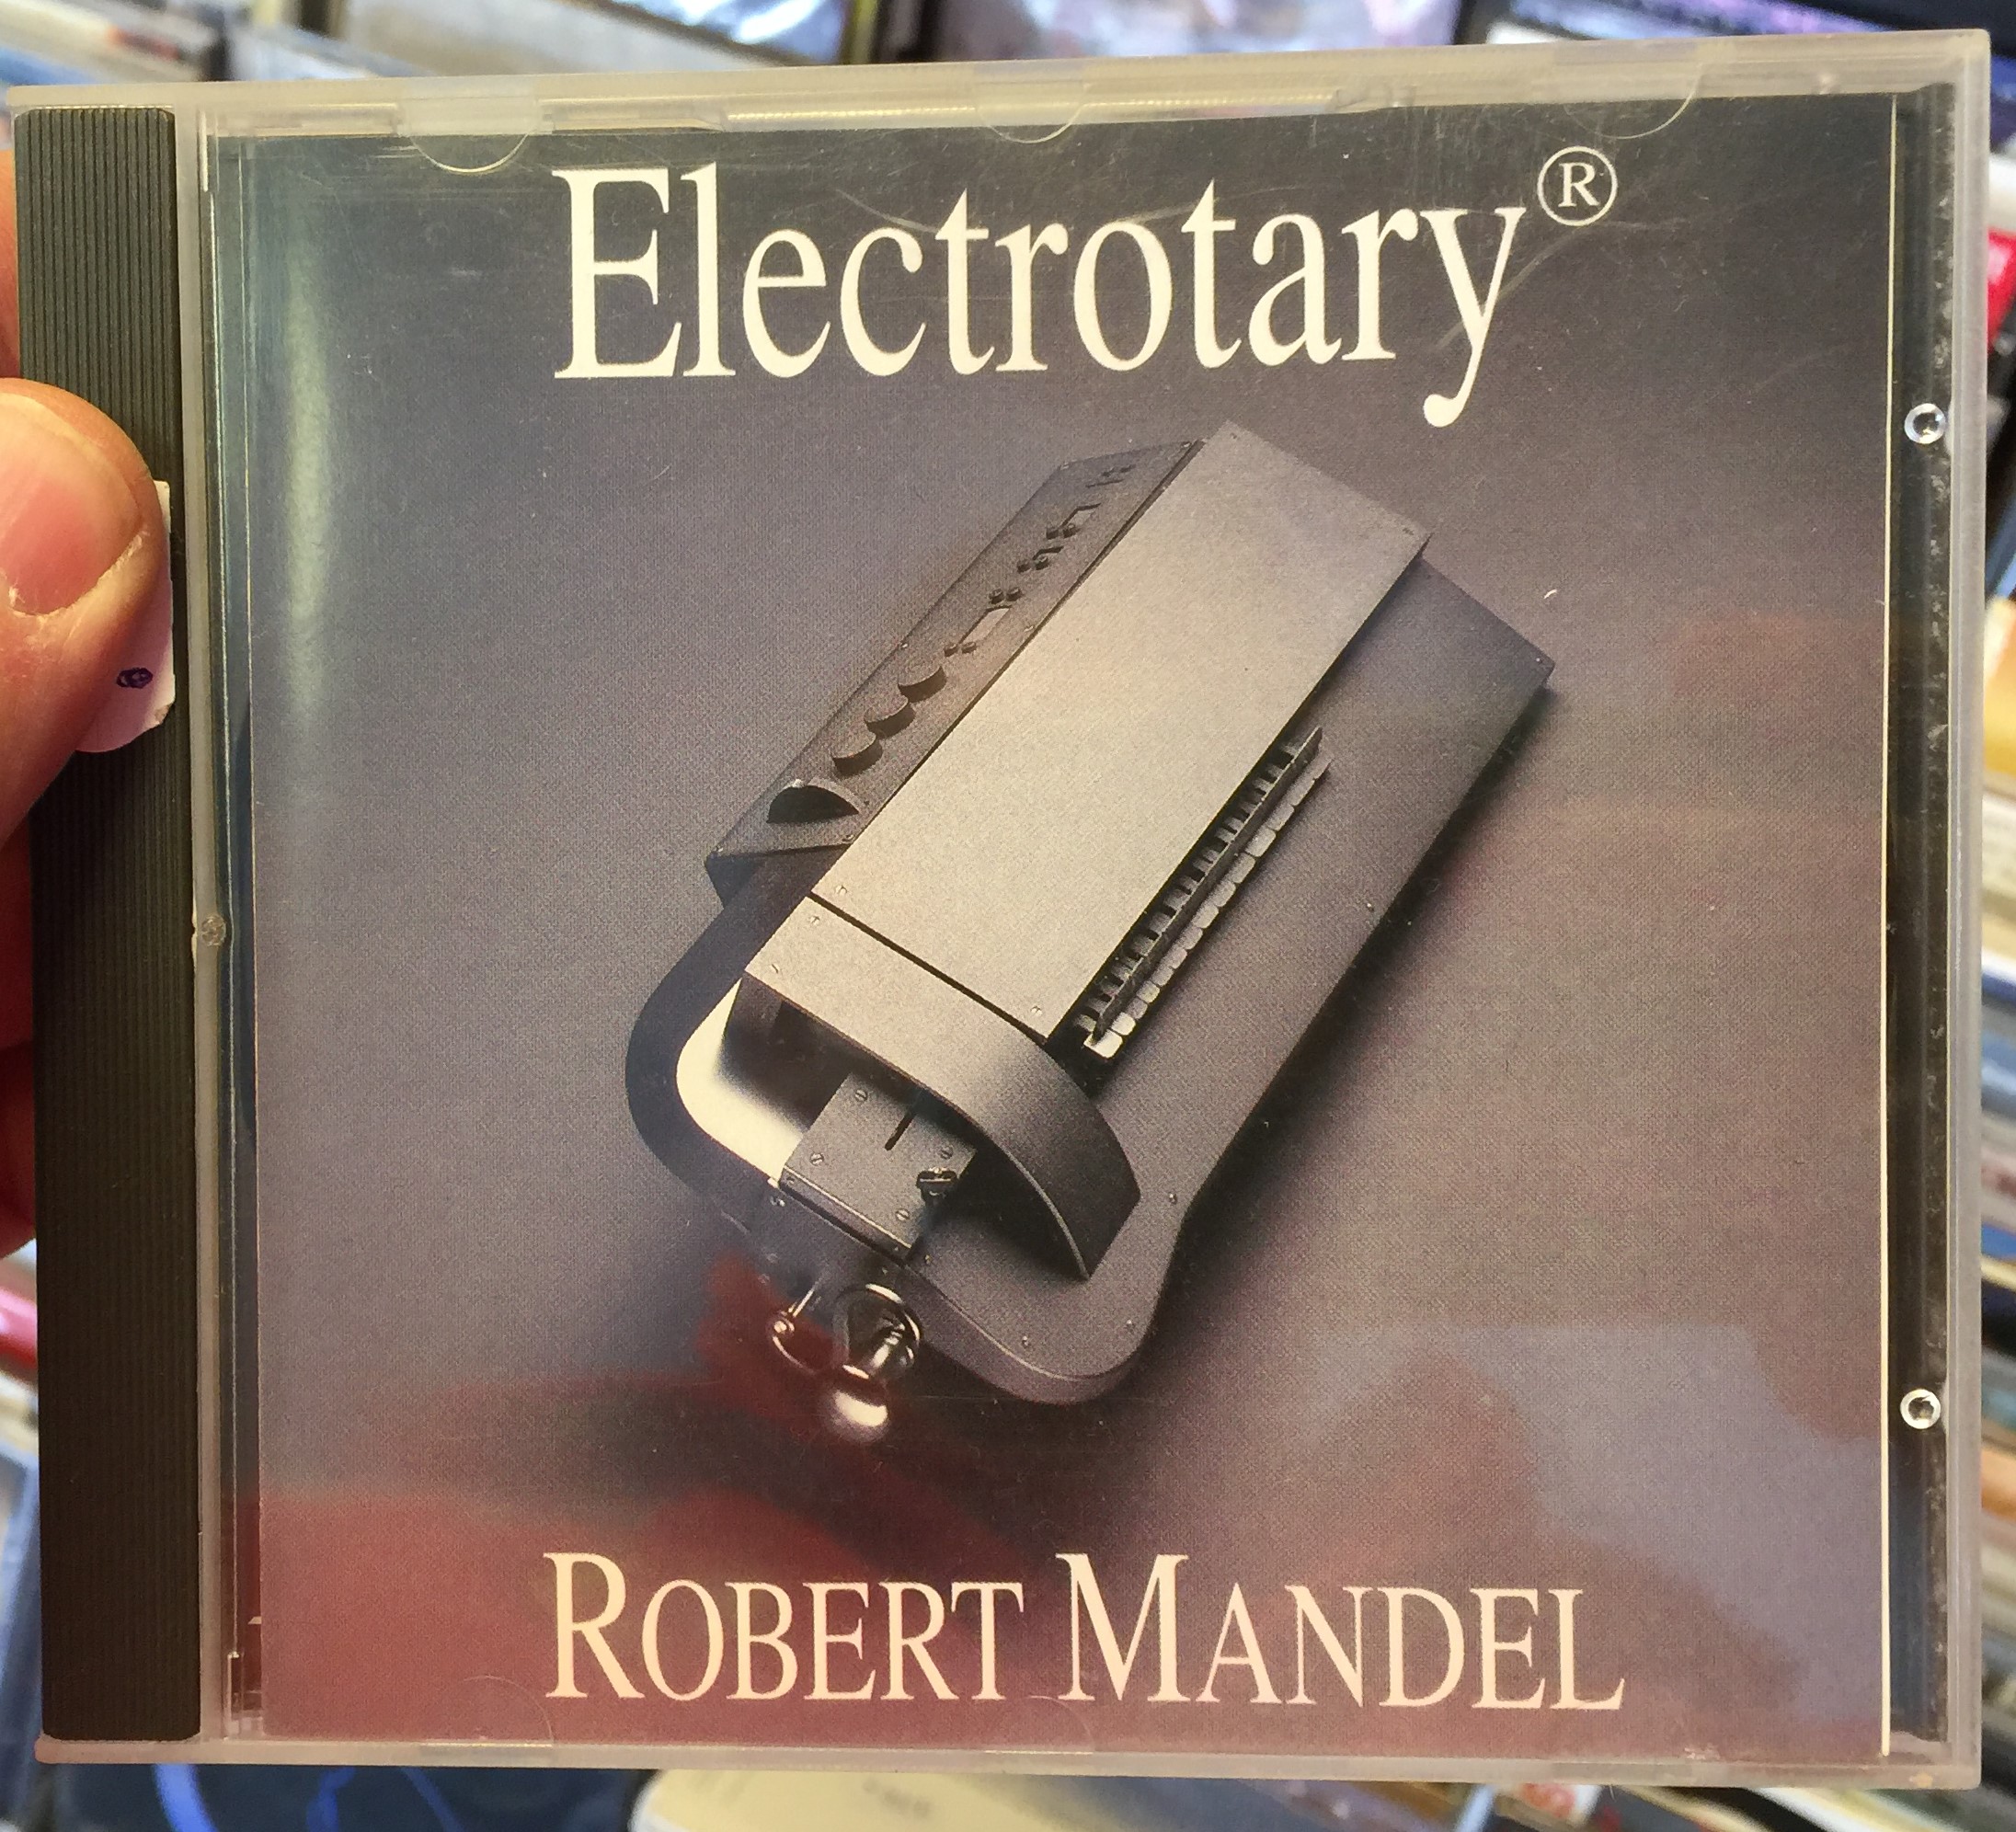 electrotary-robert-mandel-kr-m-audio-cd-1991-hcd-37502-1-.jpg